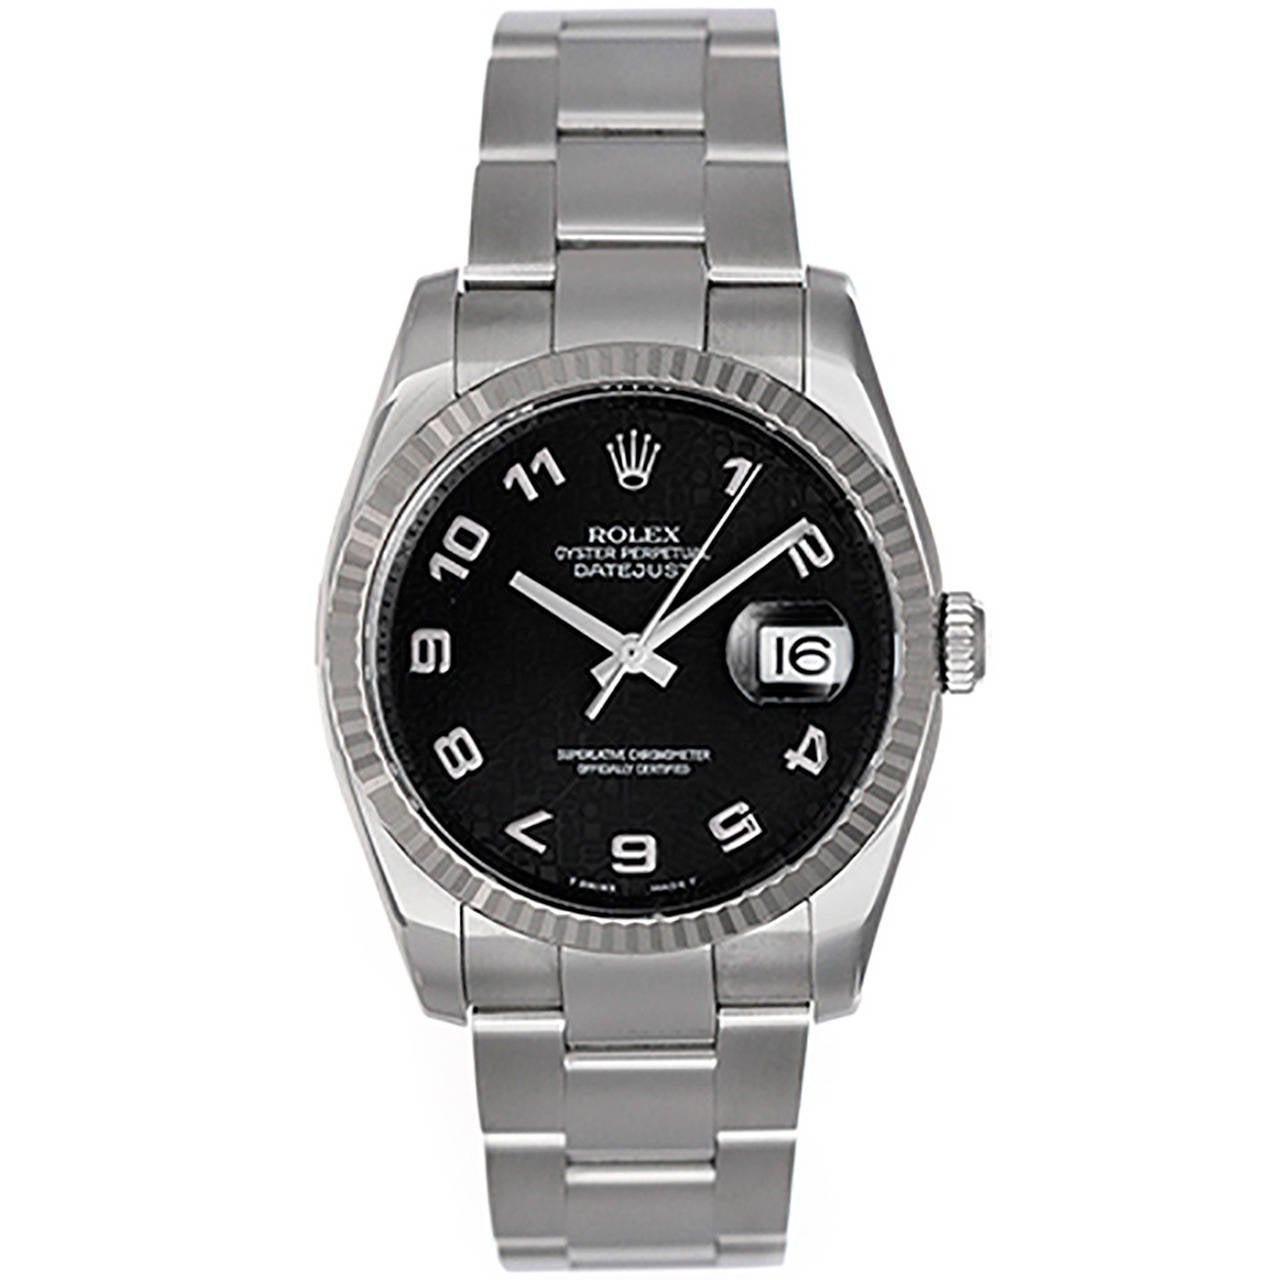 Rolex Stainless Steel White Gold Bezel Datejust Automatic Wristwatch Ref 116234